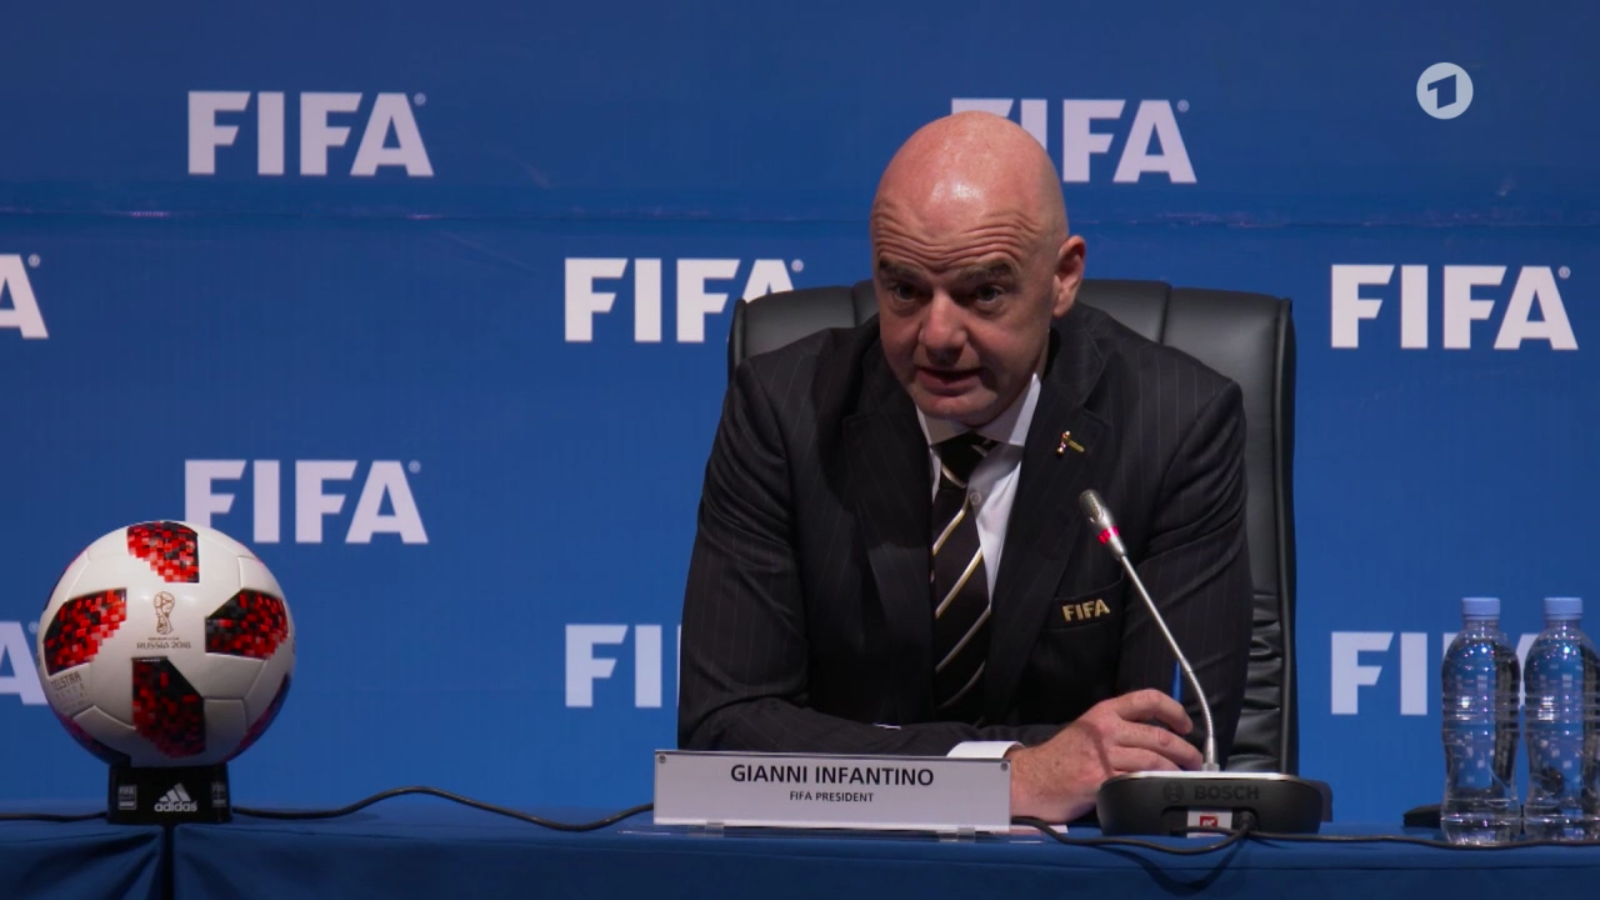 FIFA Präsident Gianni Infantino|Waage Fußball Pokal Geldscheine|Saudi Arabiens Prinz Mohammad bin Salman Al Saud